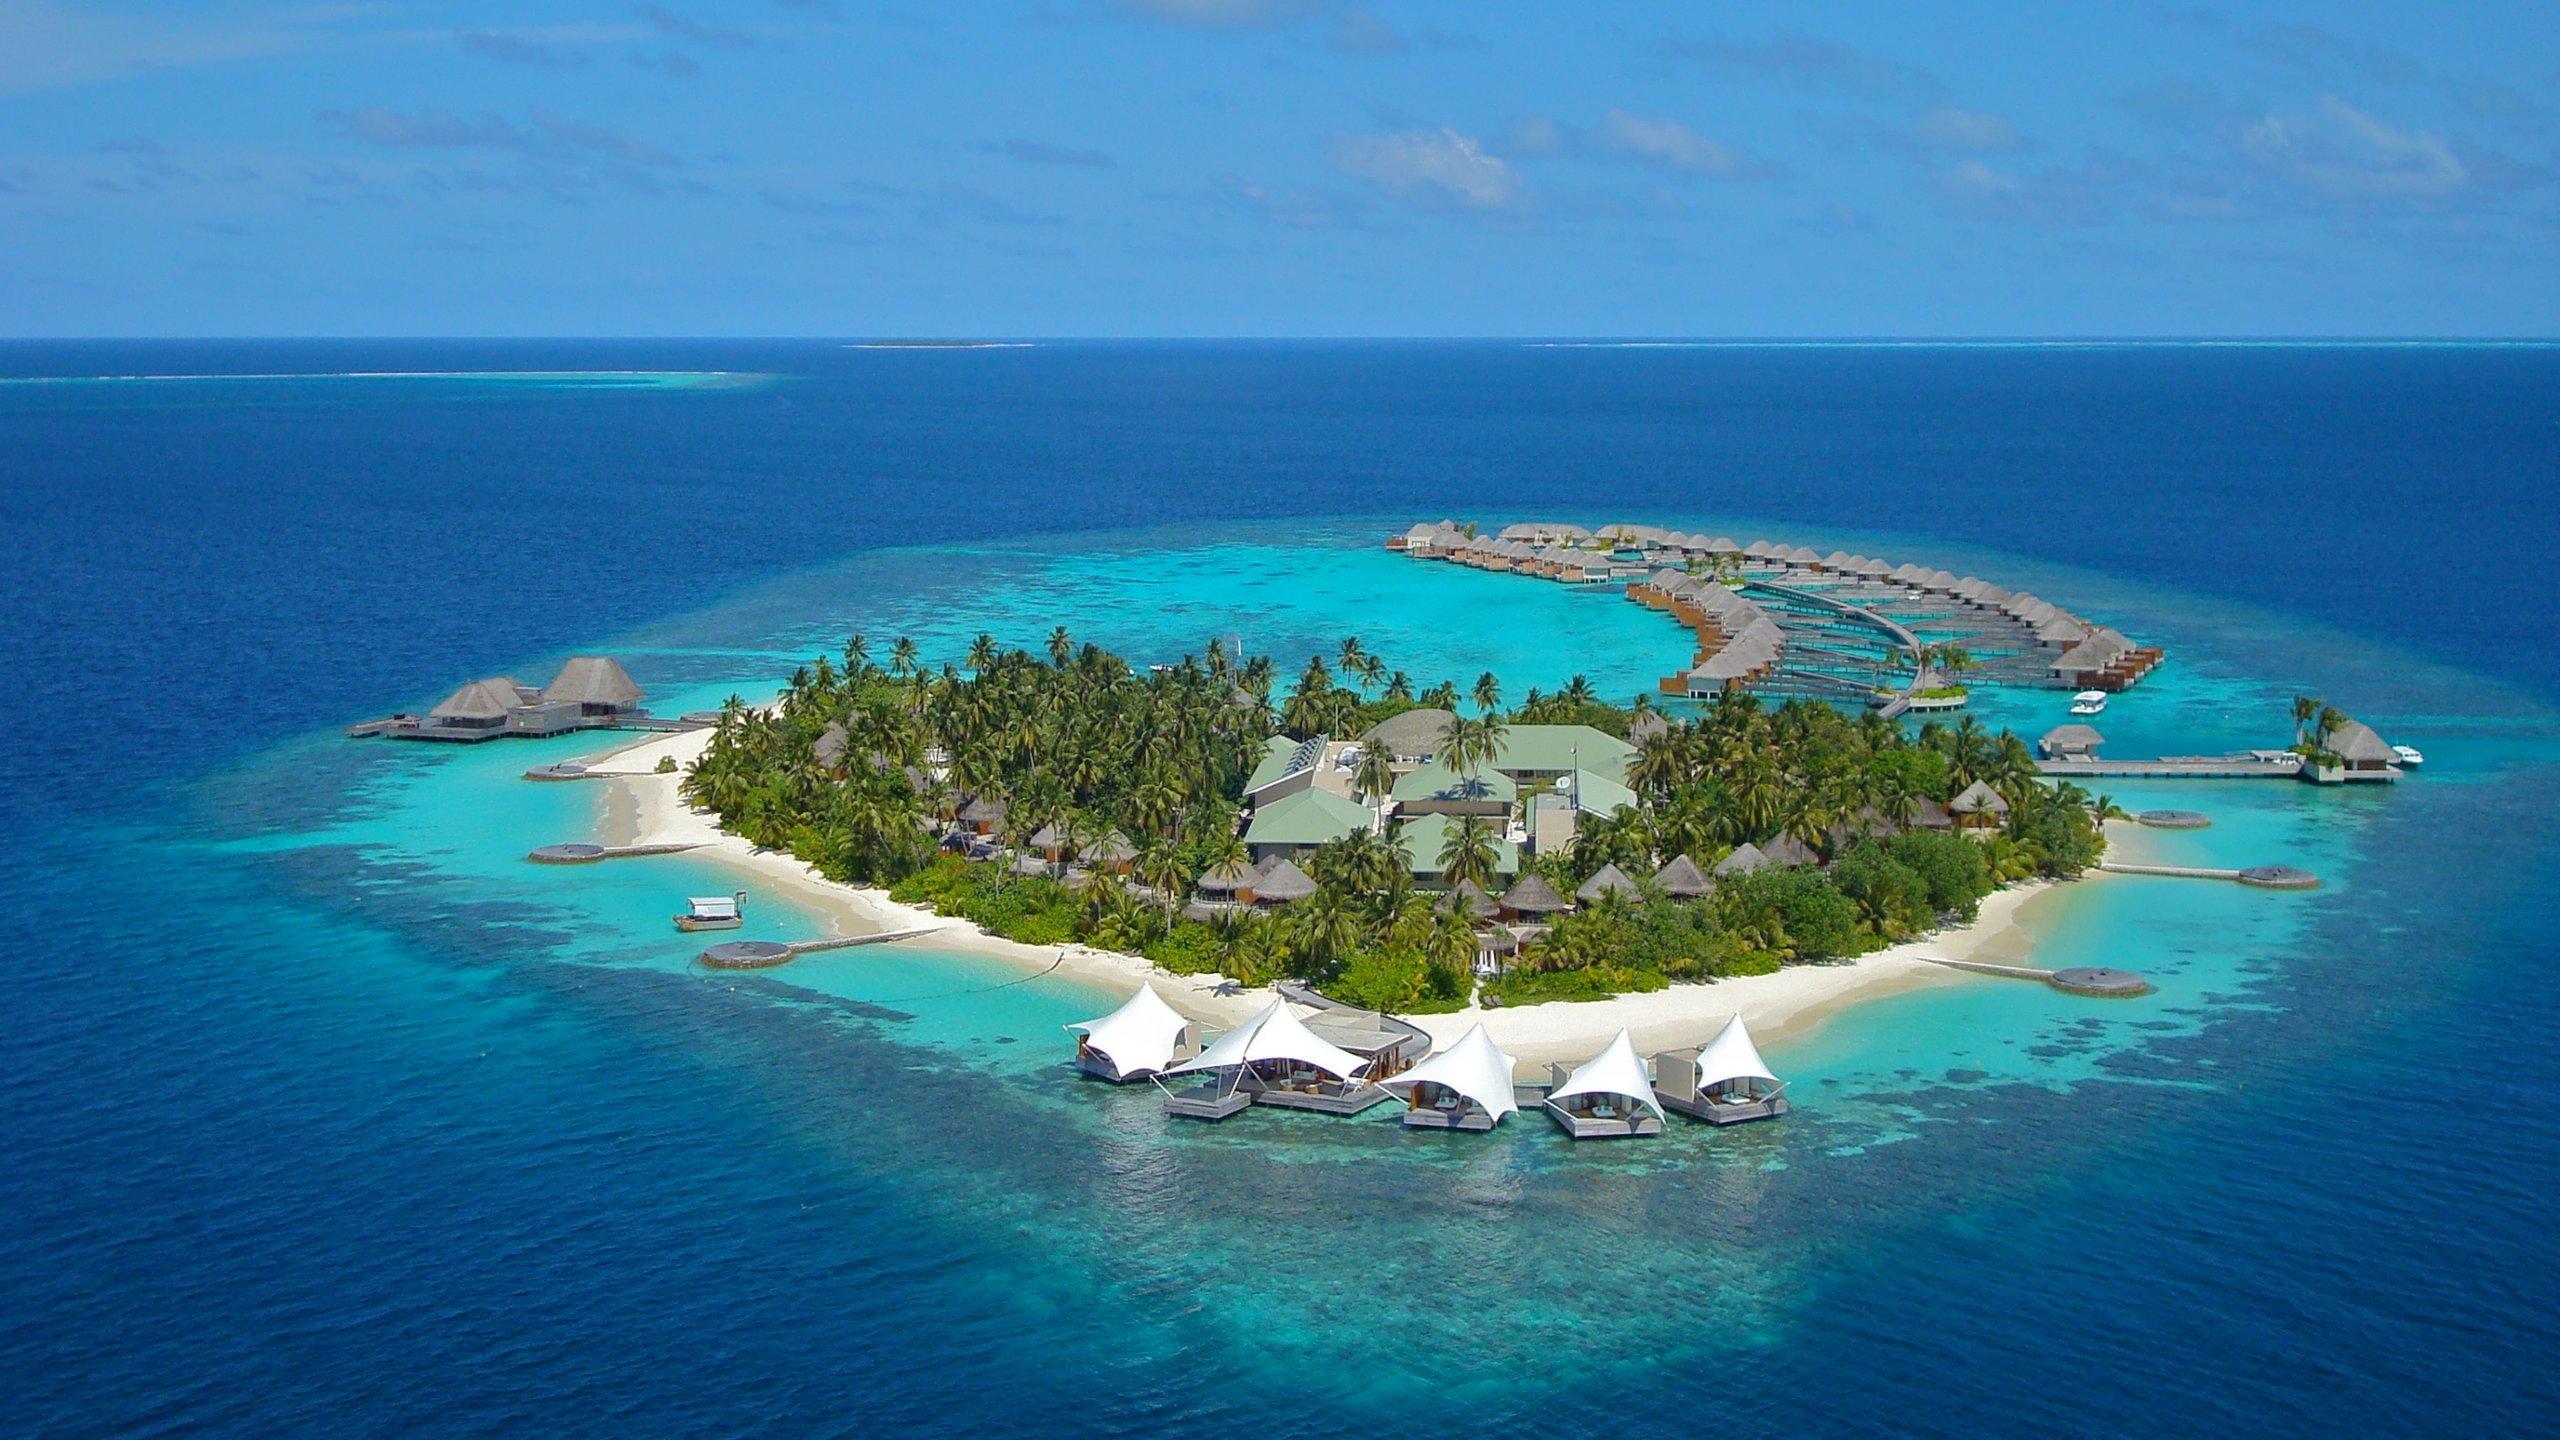 All Inclusive Hotels In Maldives: Find All Inclusive Hotels